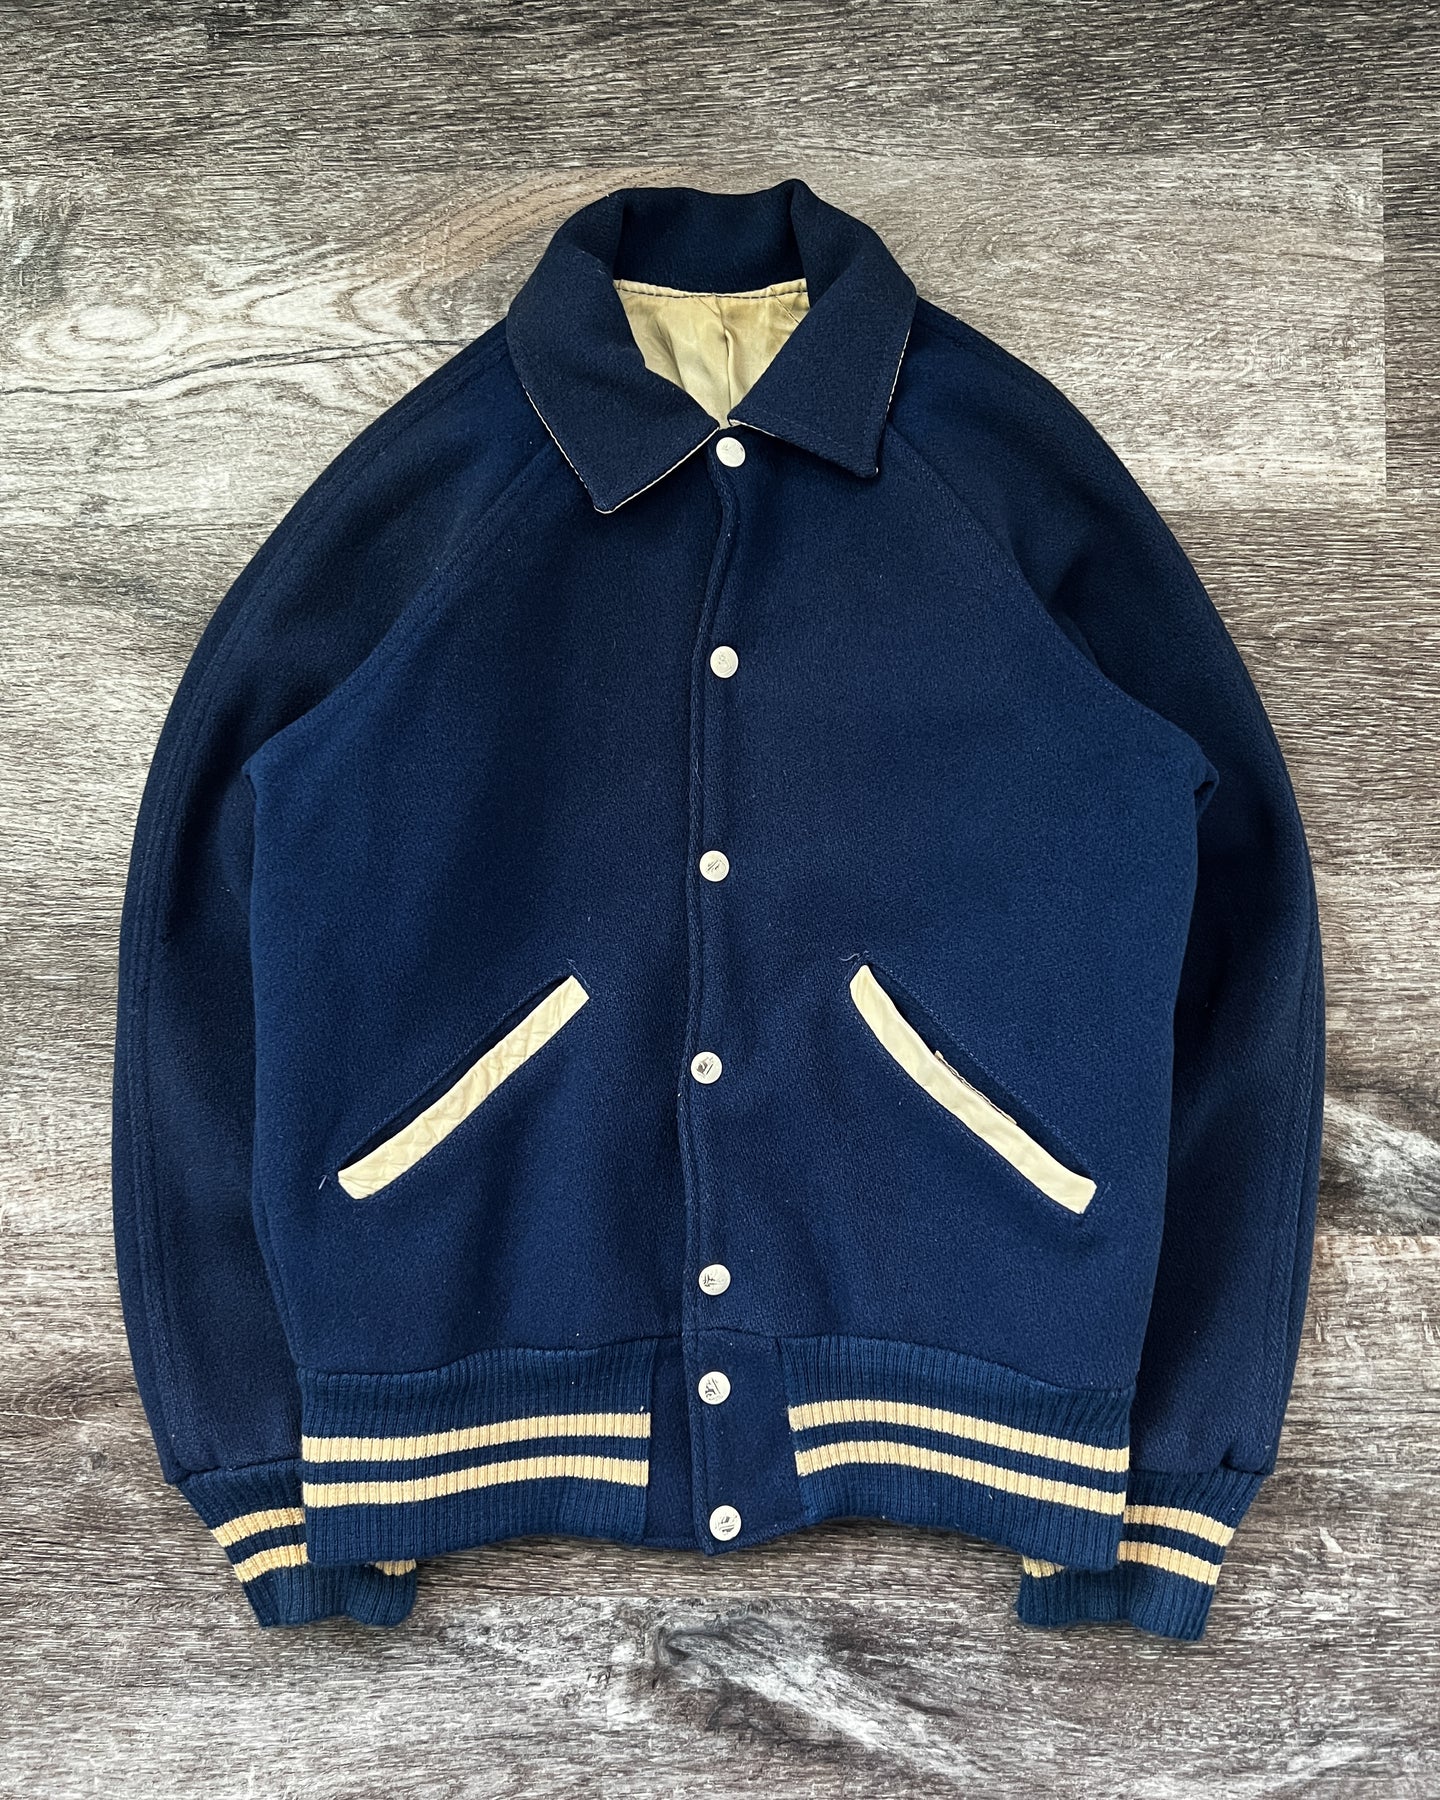 1960s Raglan Blank Varsity Jacket - Size Medium